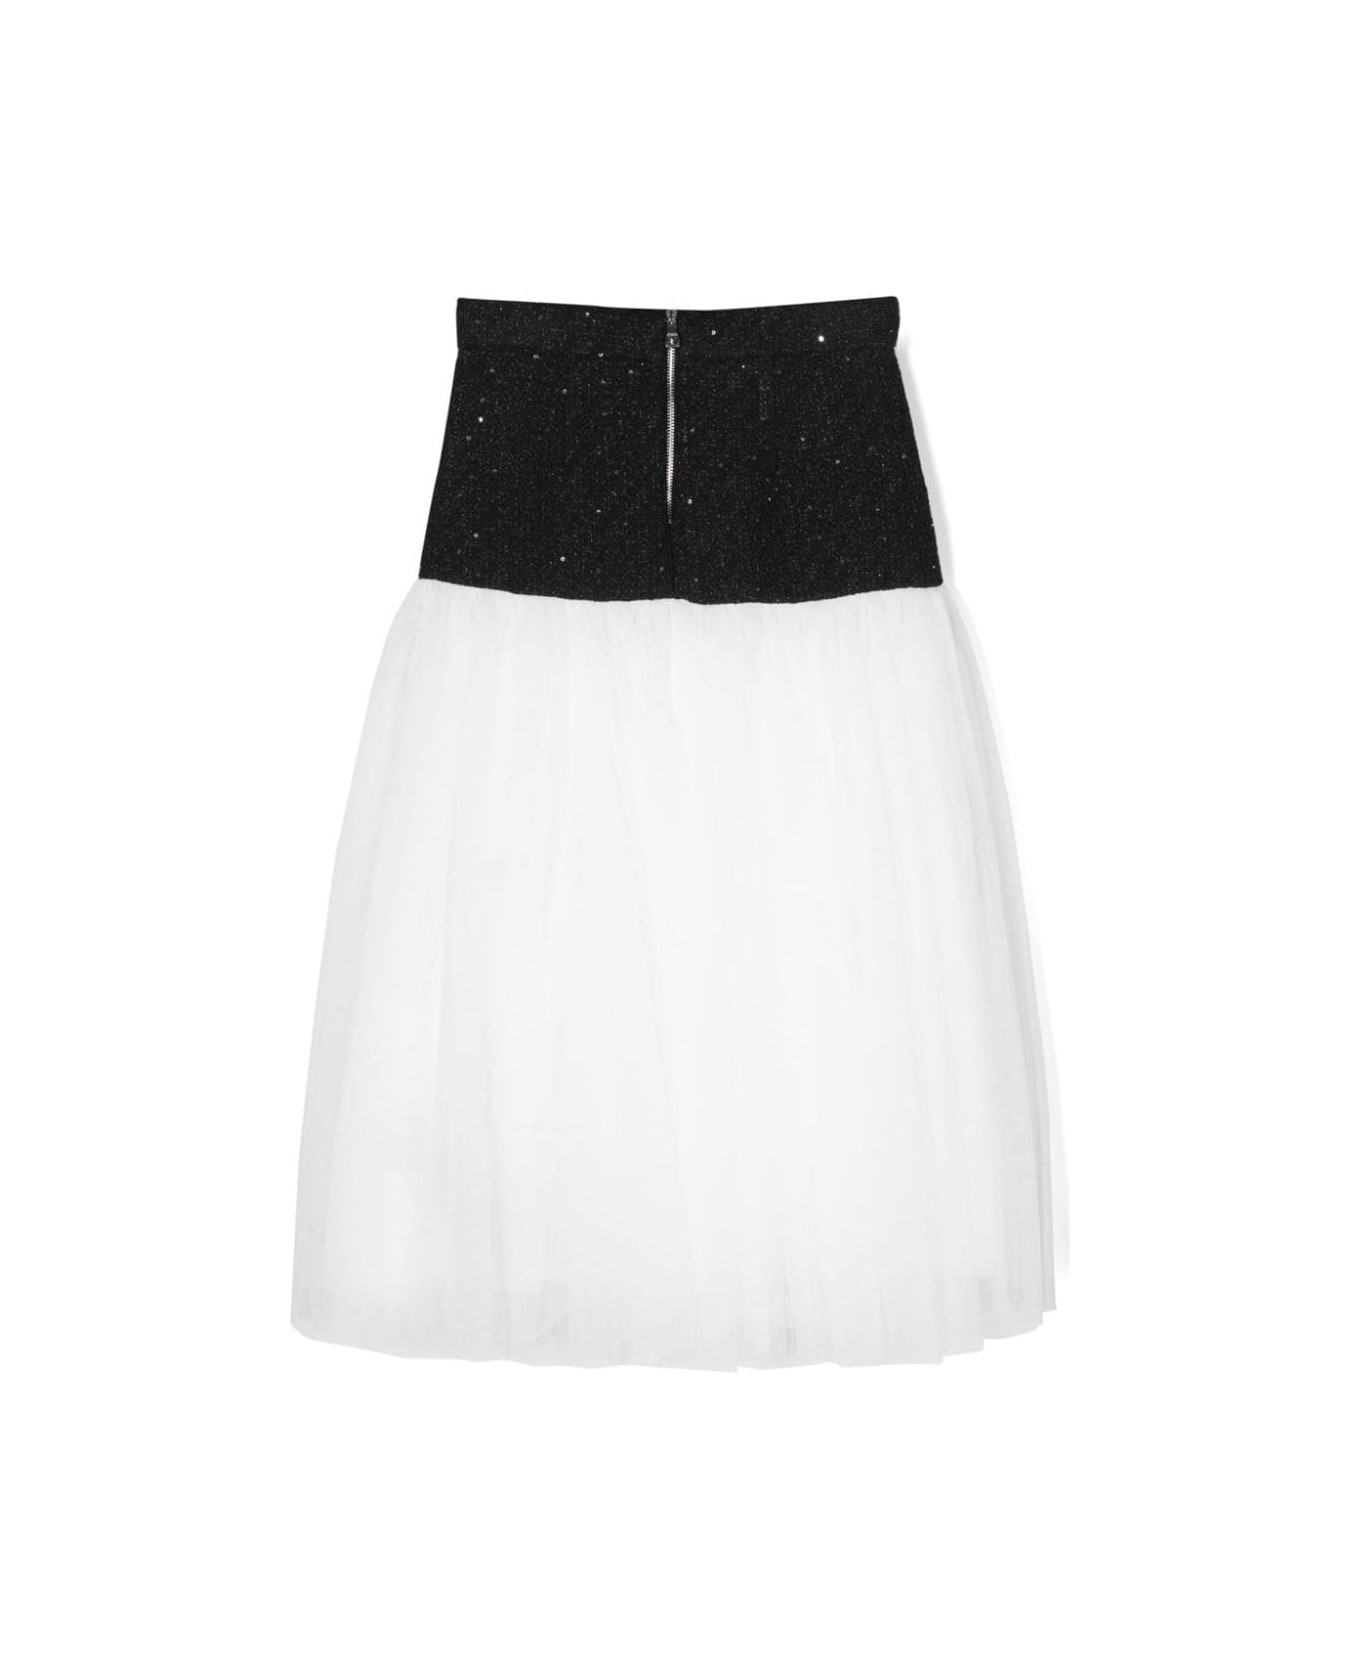 Balmain Skirt With Insert Design - Black ボトムス